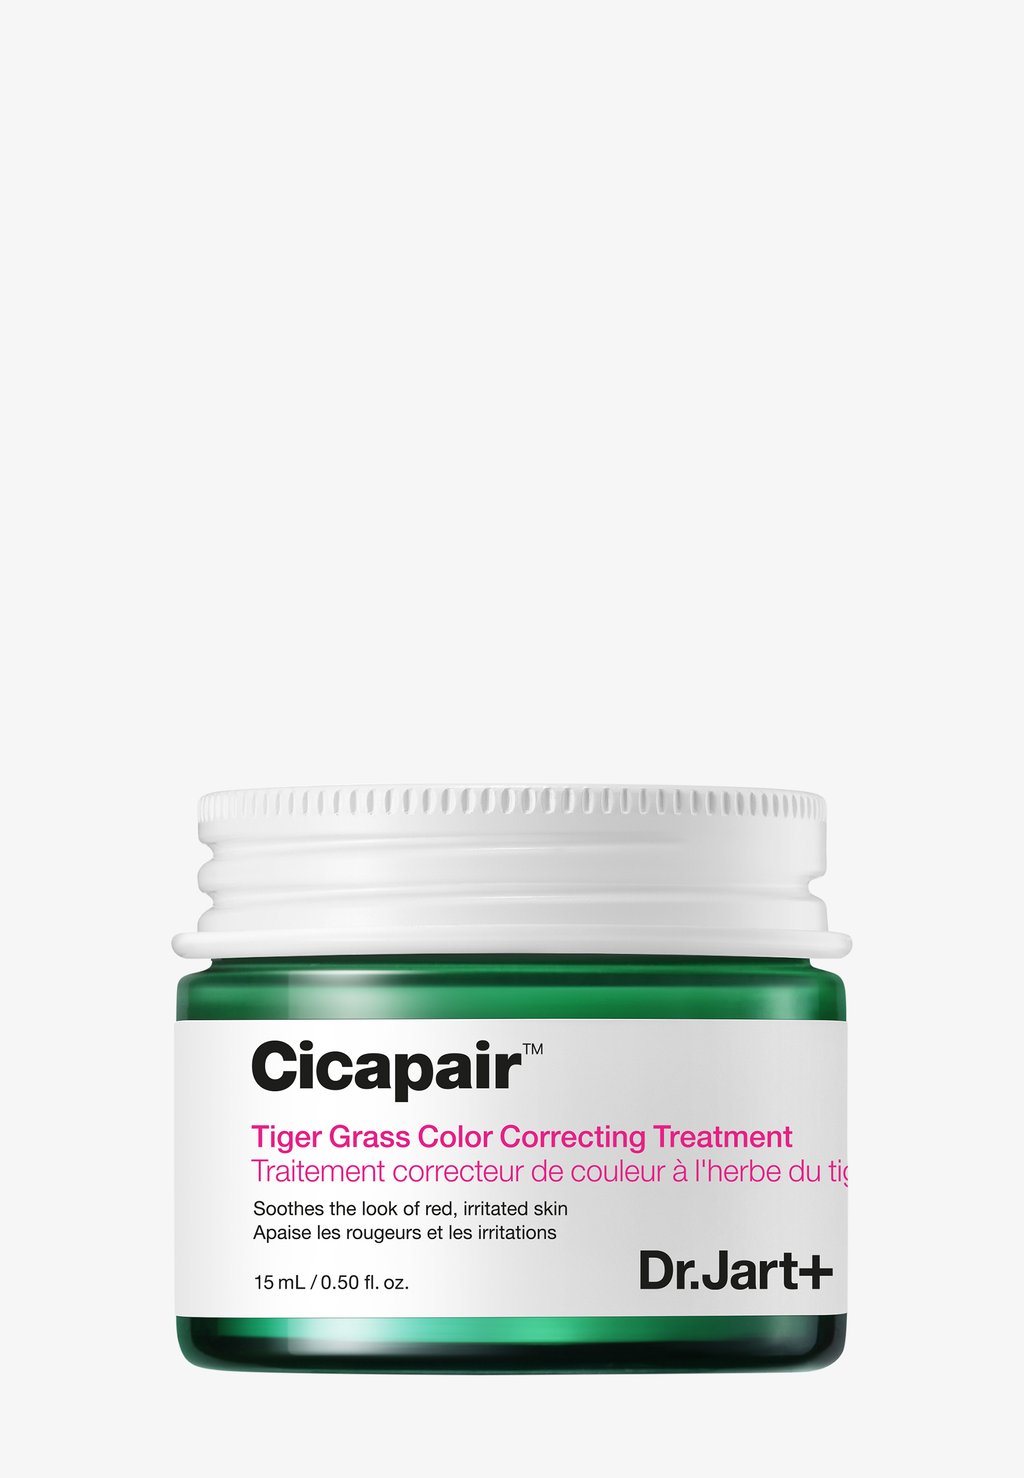 Дневной крем Dr.Jart+ Cicapair Tiger Grass Color Correcting Treatment Dr. Jart+